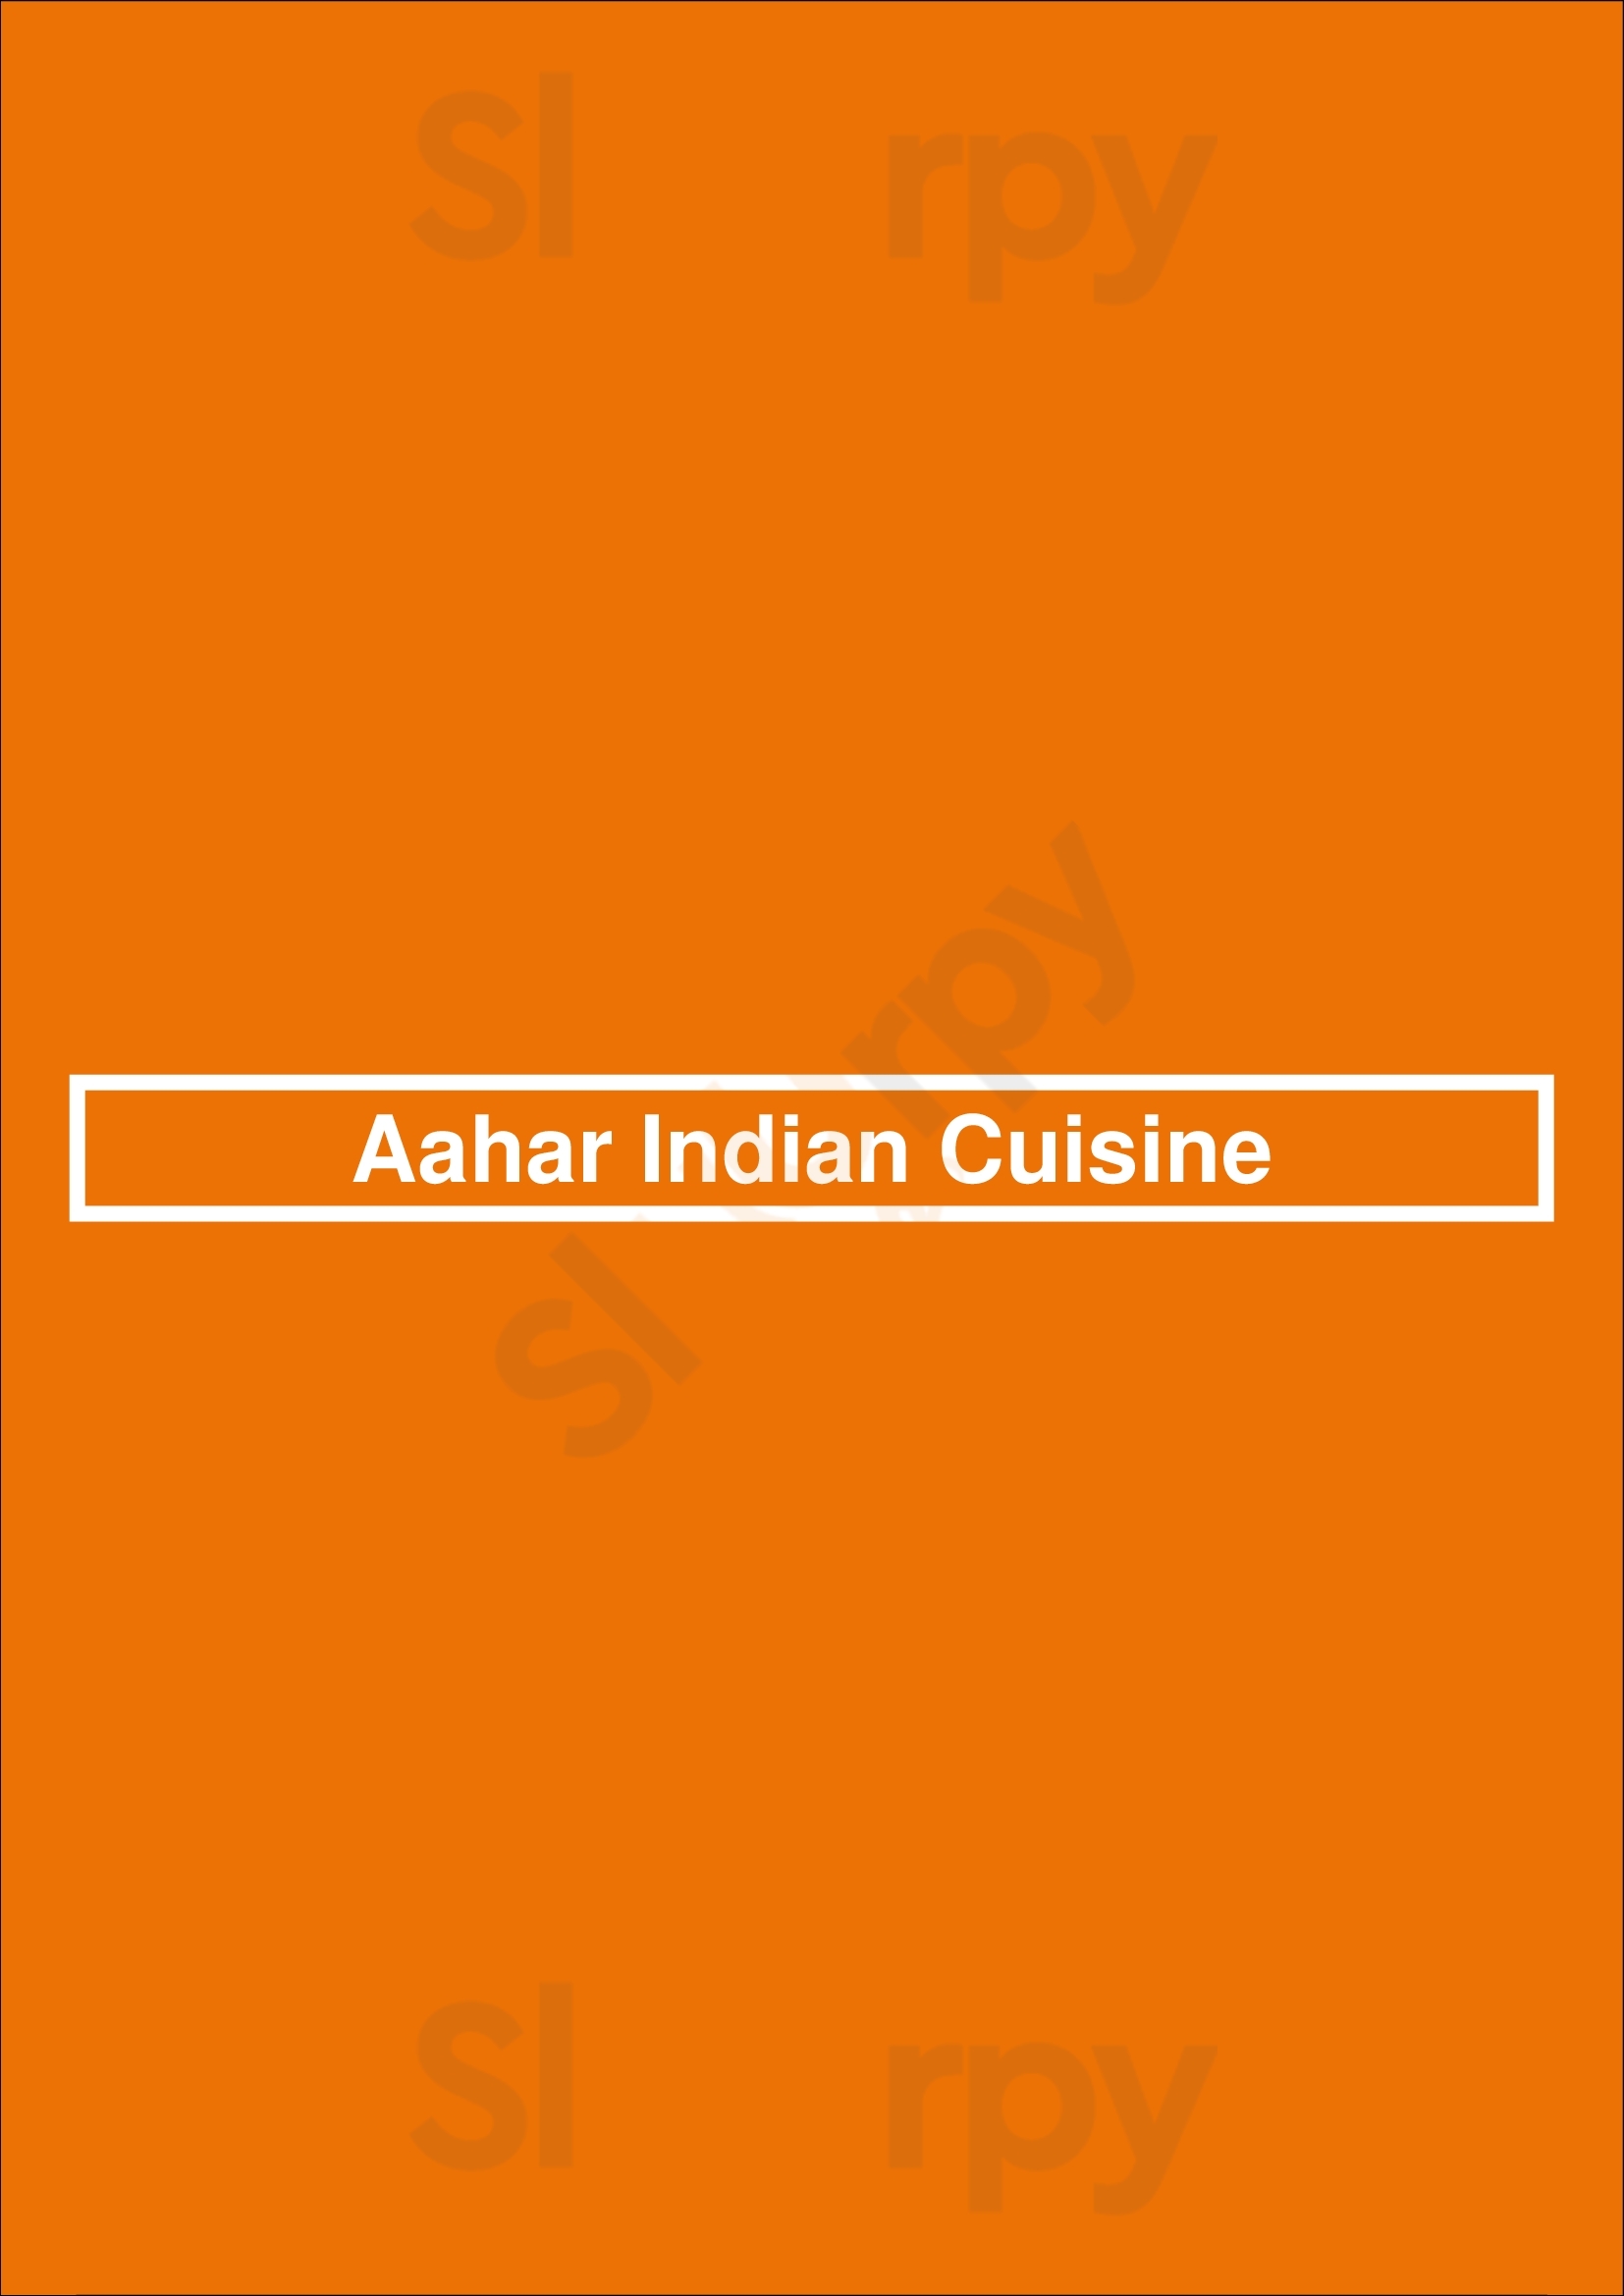 Aahar Indian Cuisine New York City Menu - 1